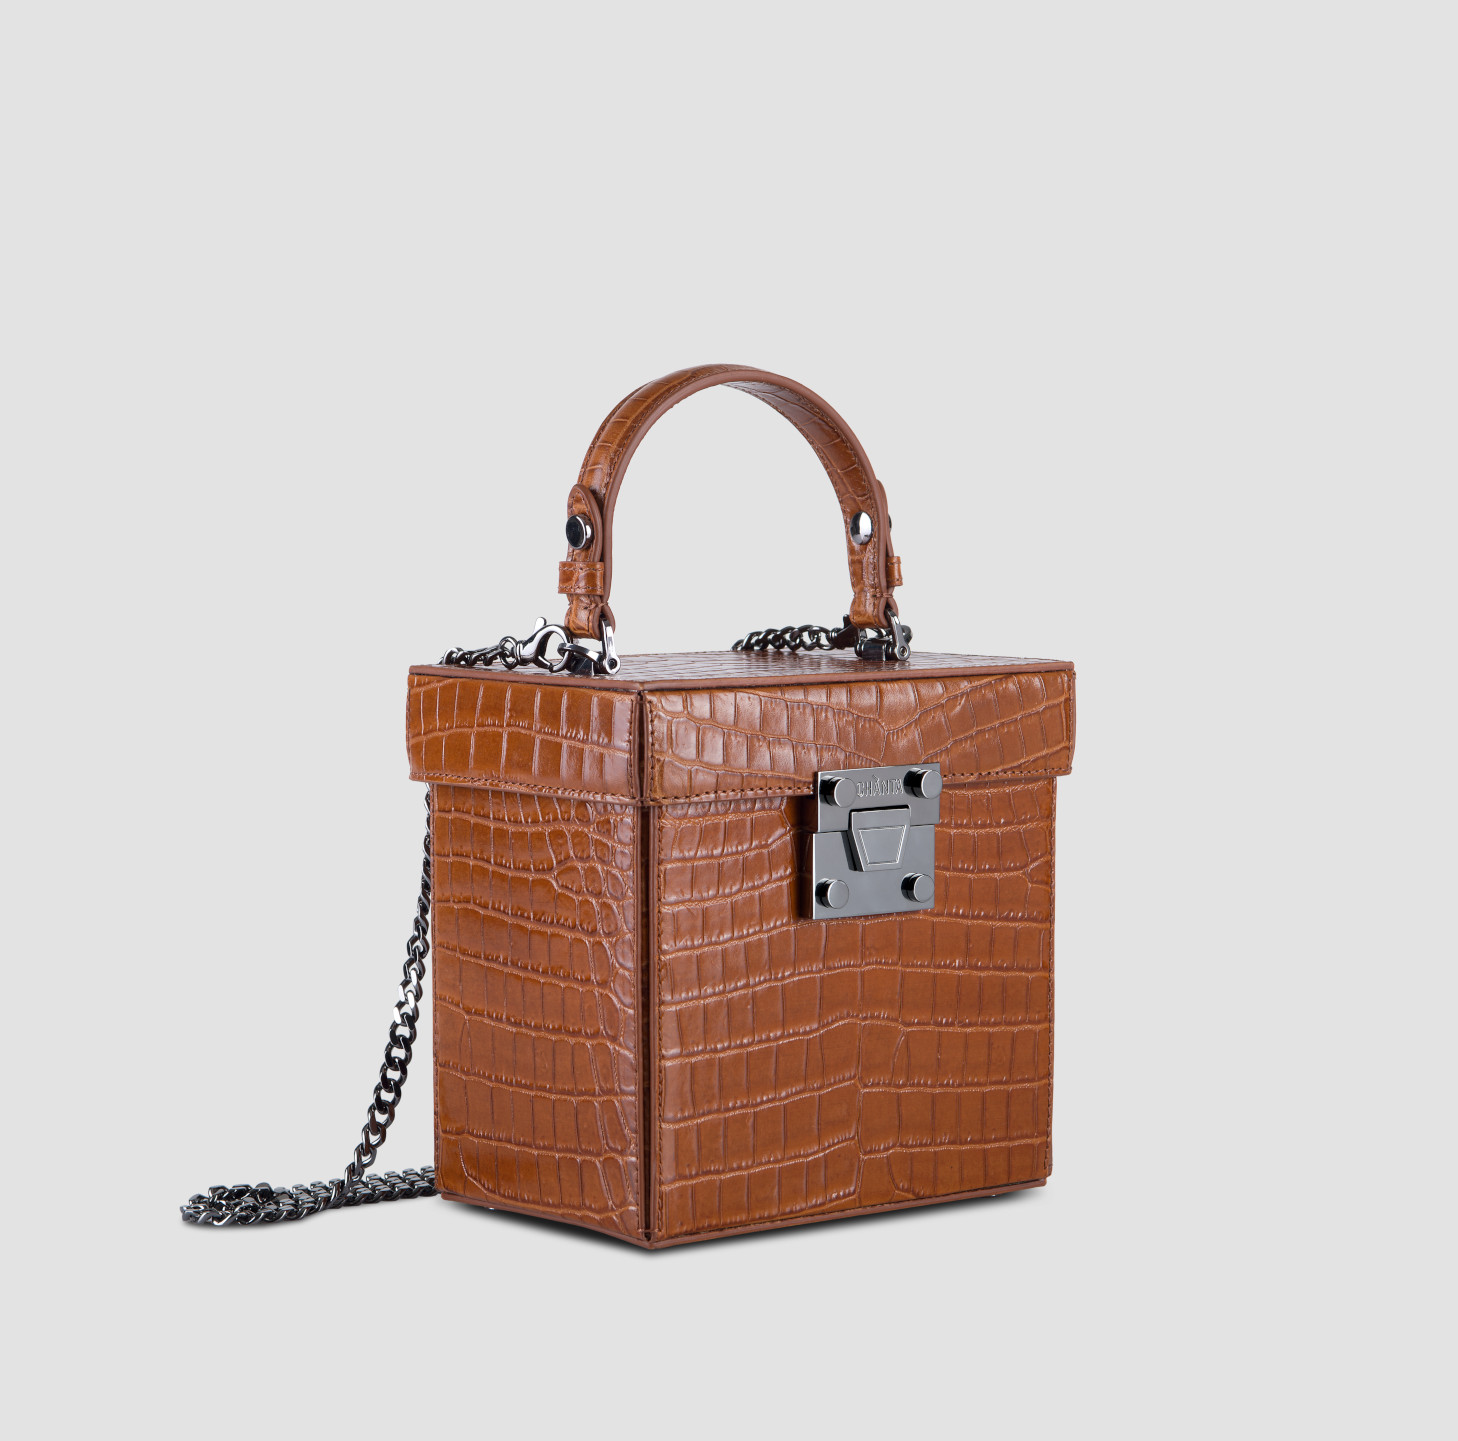 CHANTA Handcrafted Italian handbags